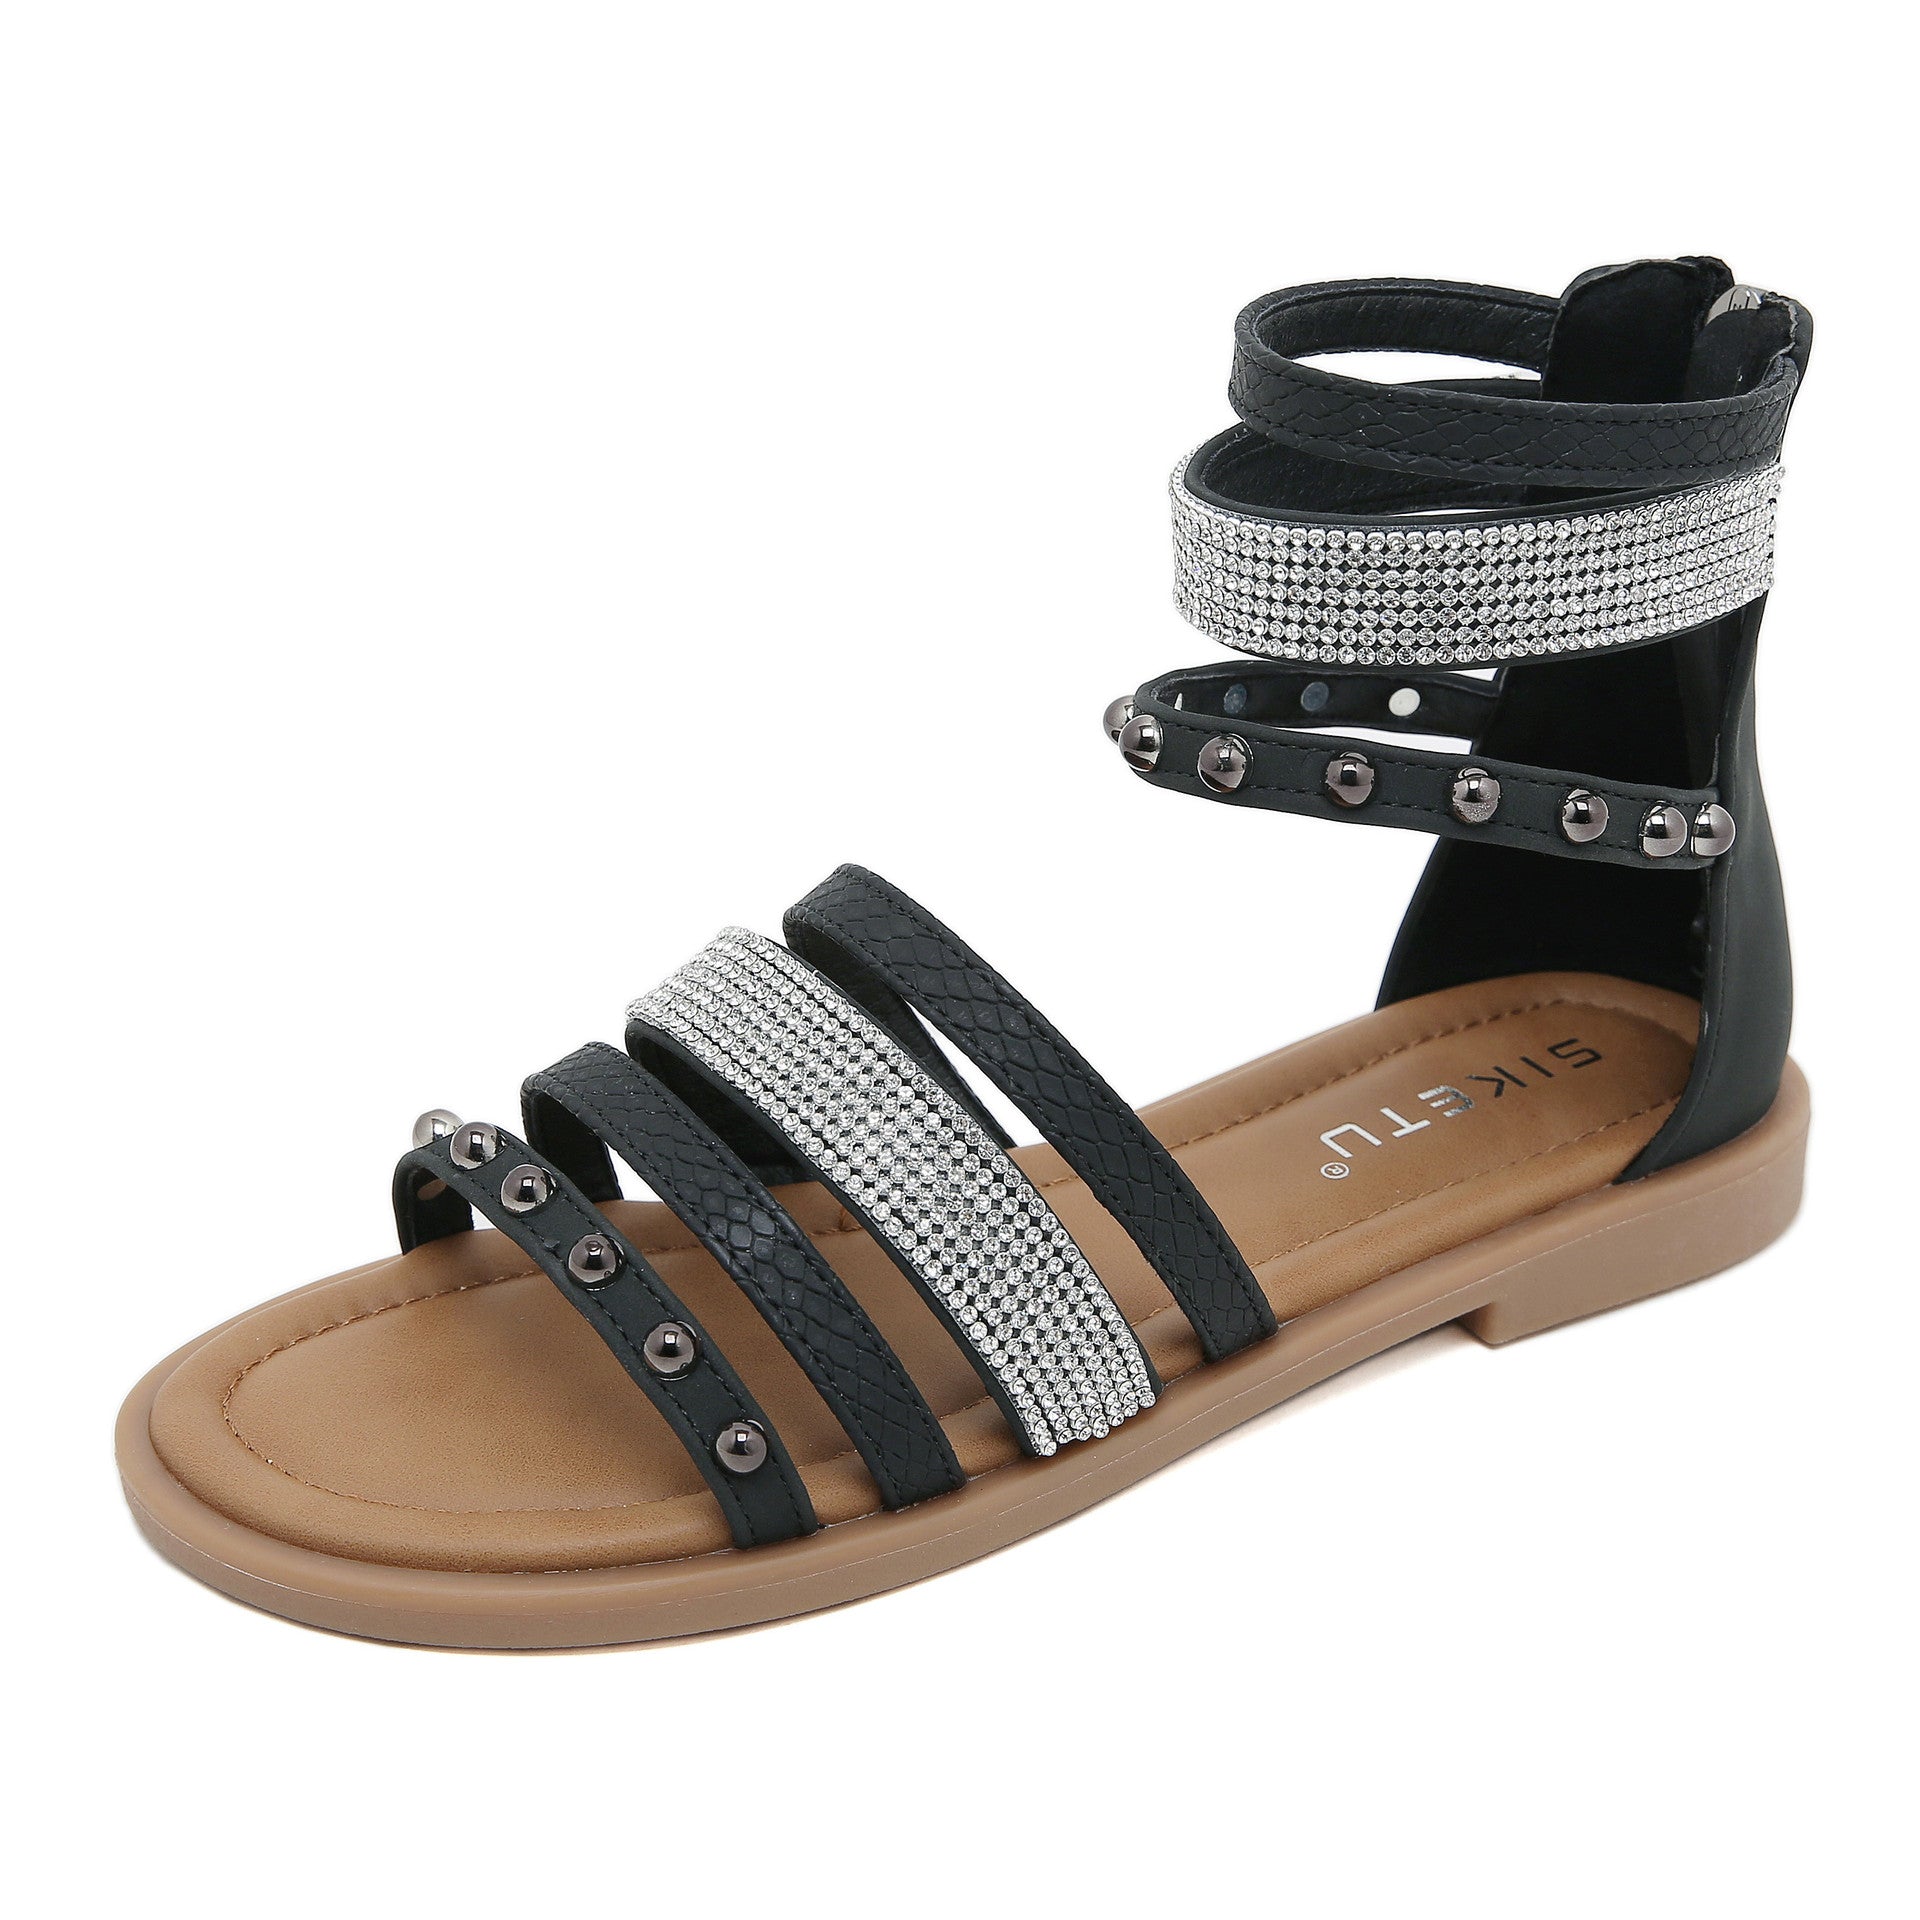 Owlkay Fashion Comfortable Roman Sandals